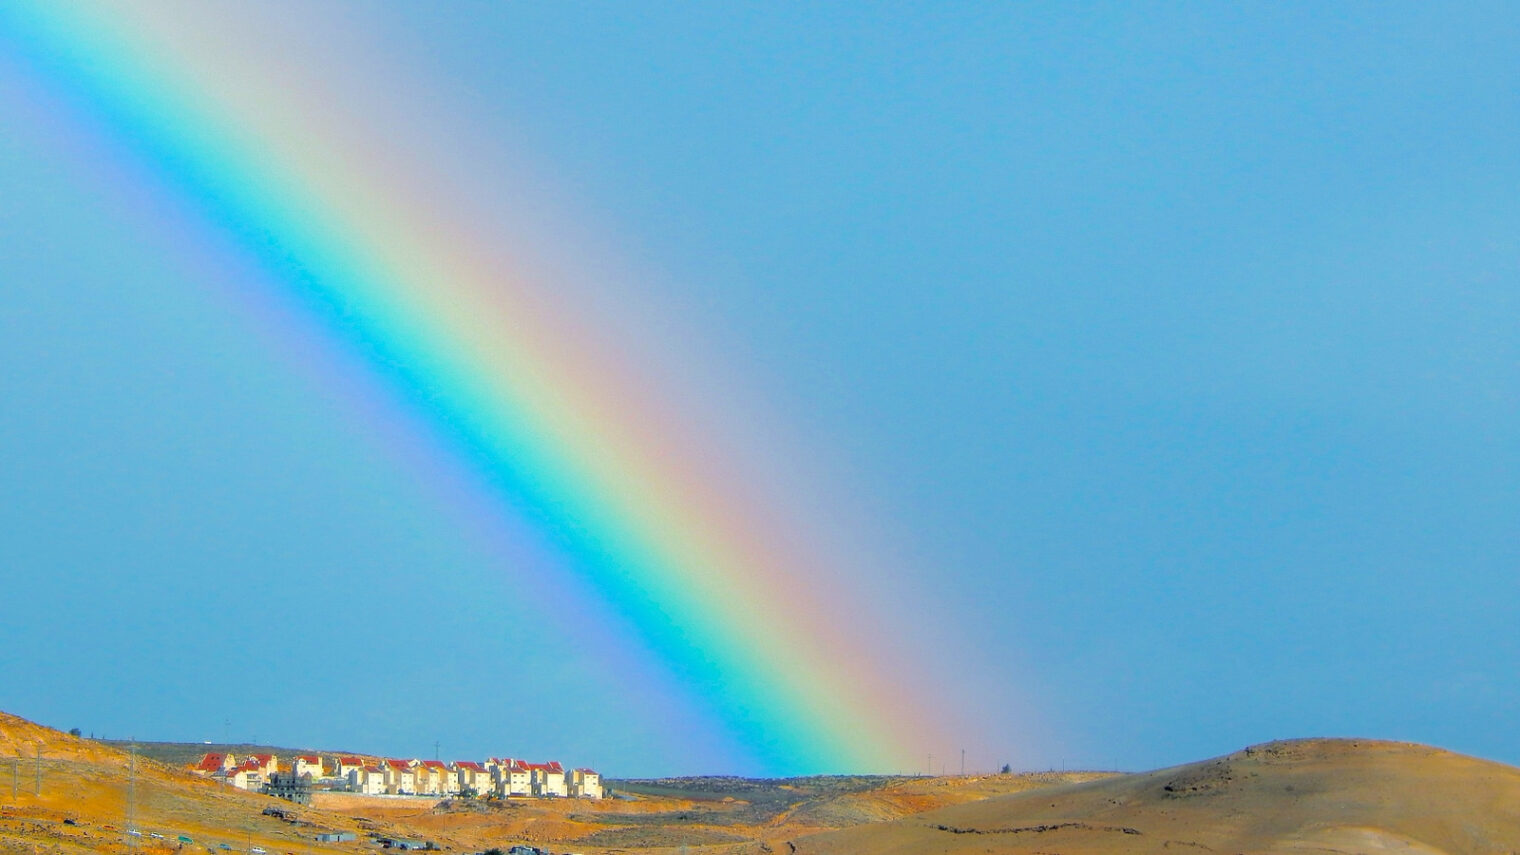 10 spectacular rainbows over Israel - ISRAEL21c